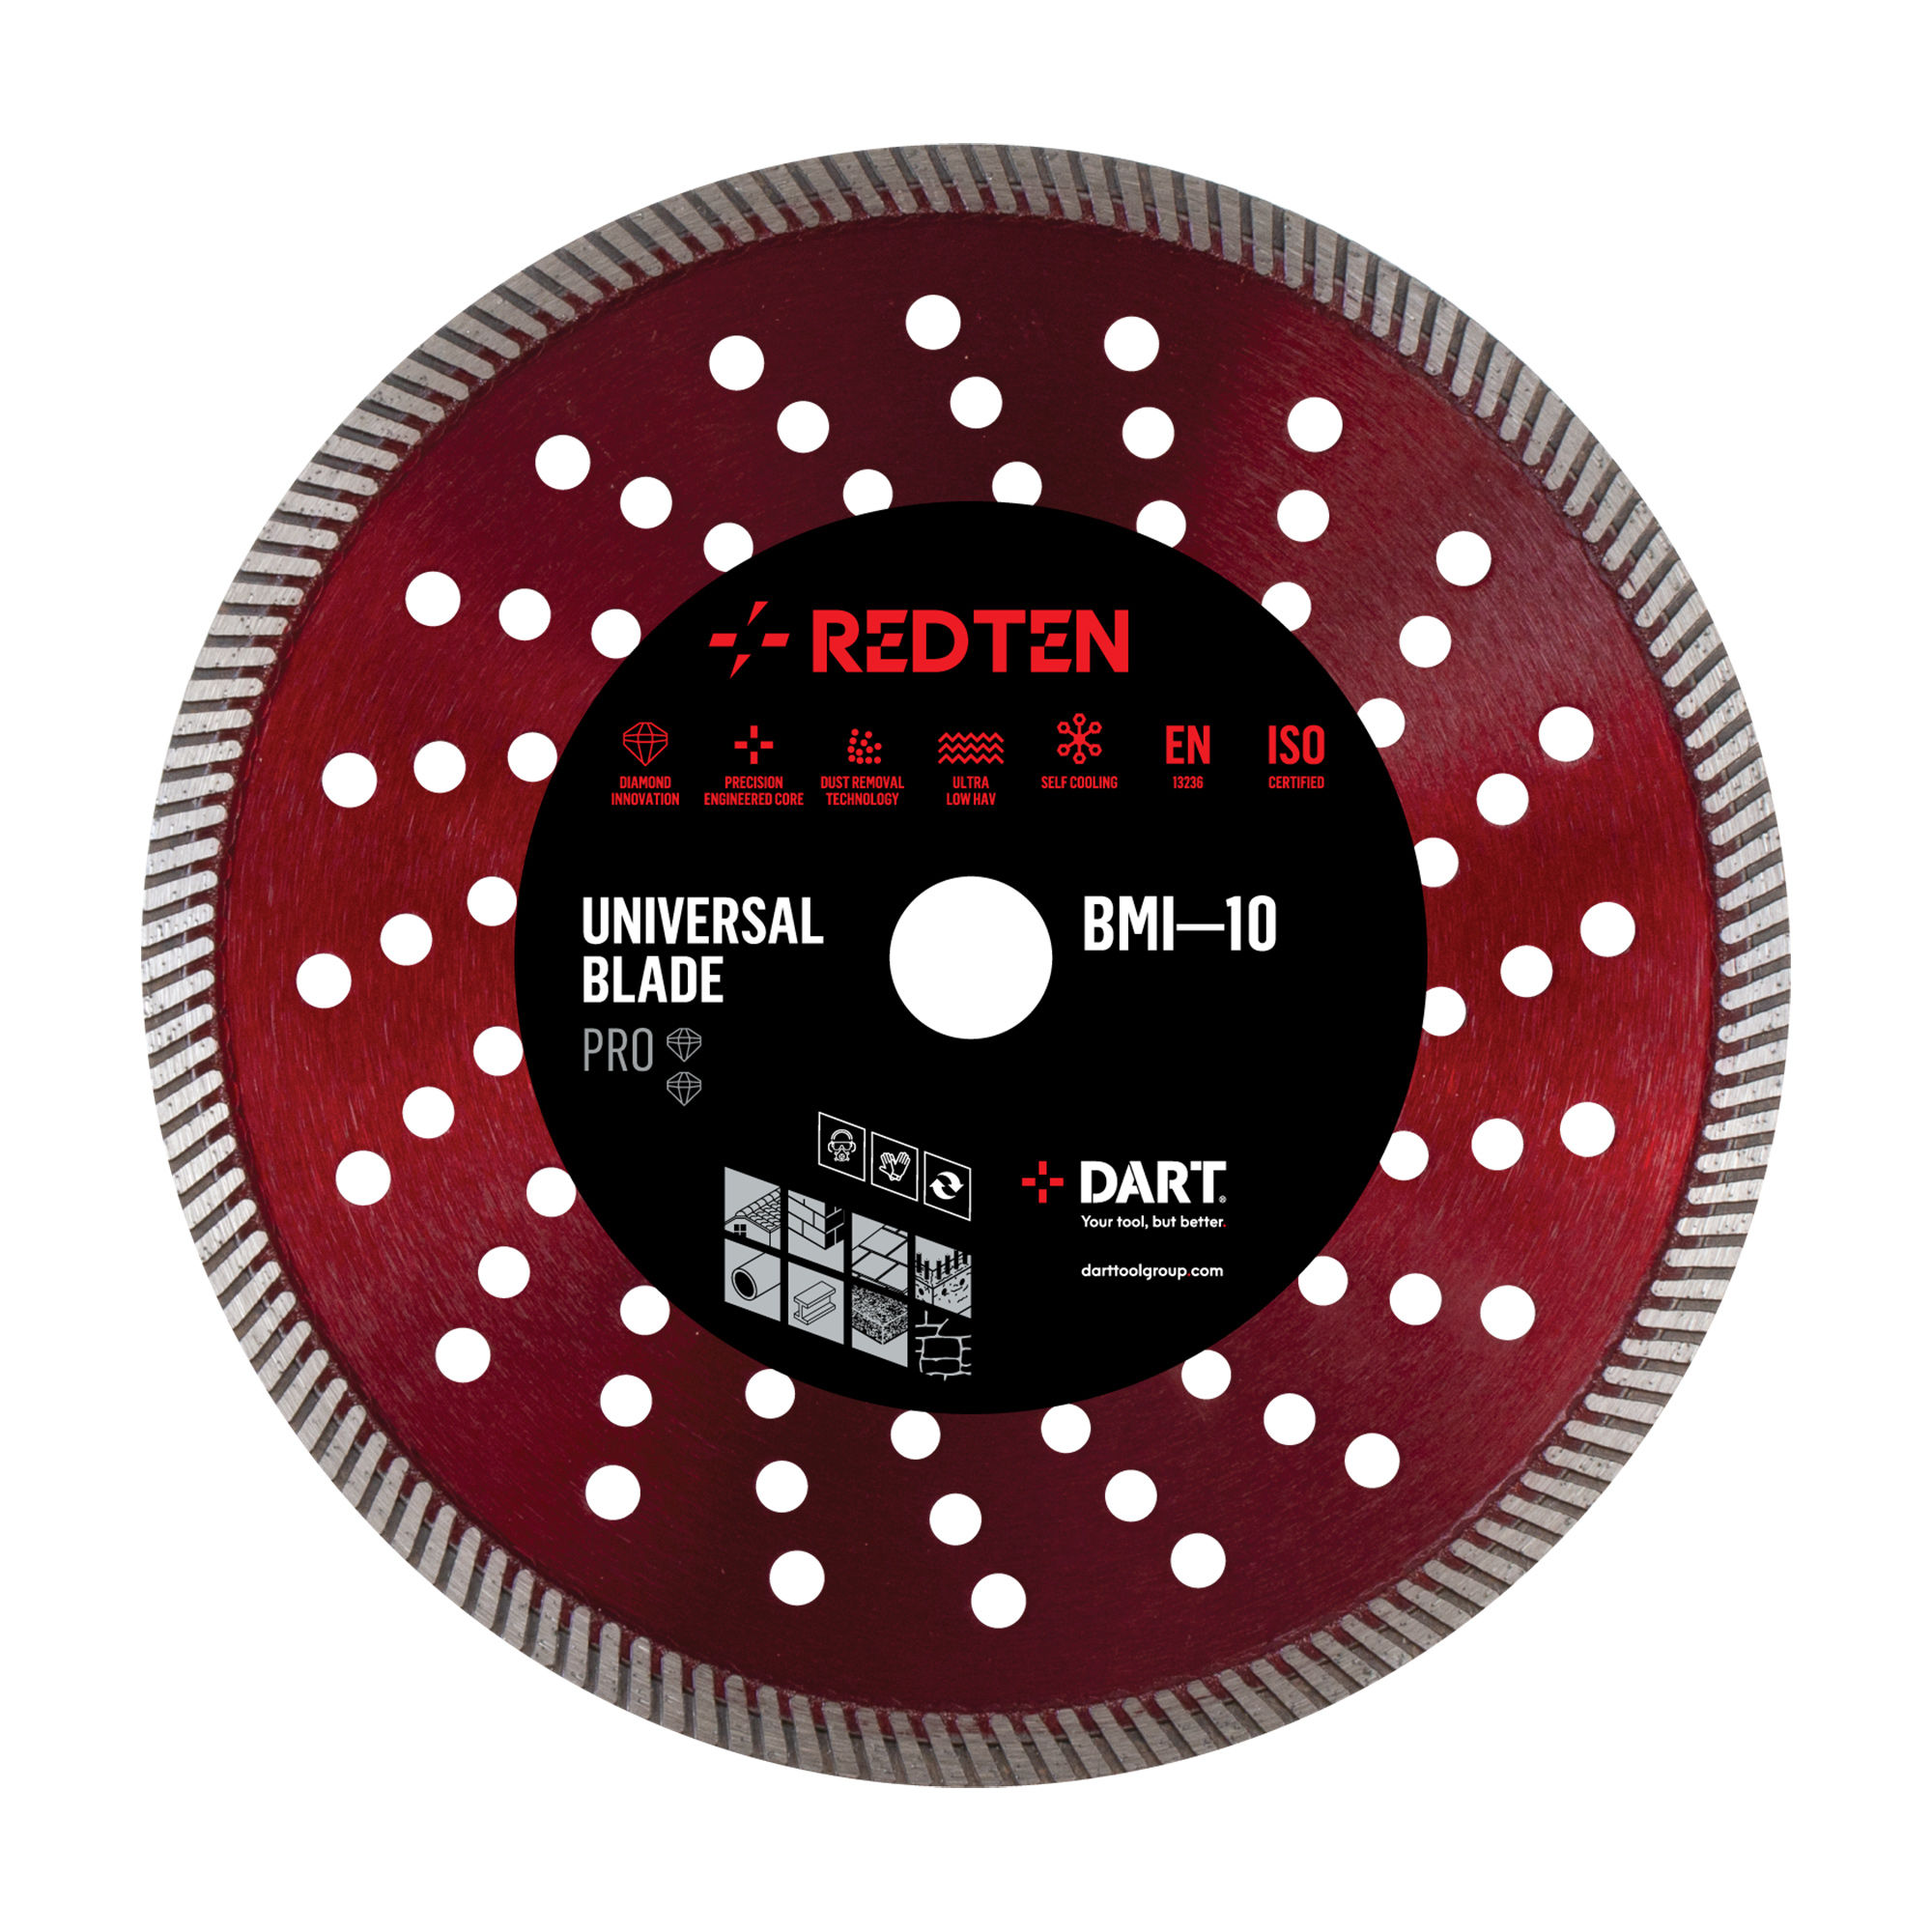 Dart Red Ten Pro BMI-10 Universal Diamond Blade Cutting Disc D115mm x B22.23mm - DB00070